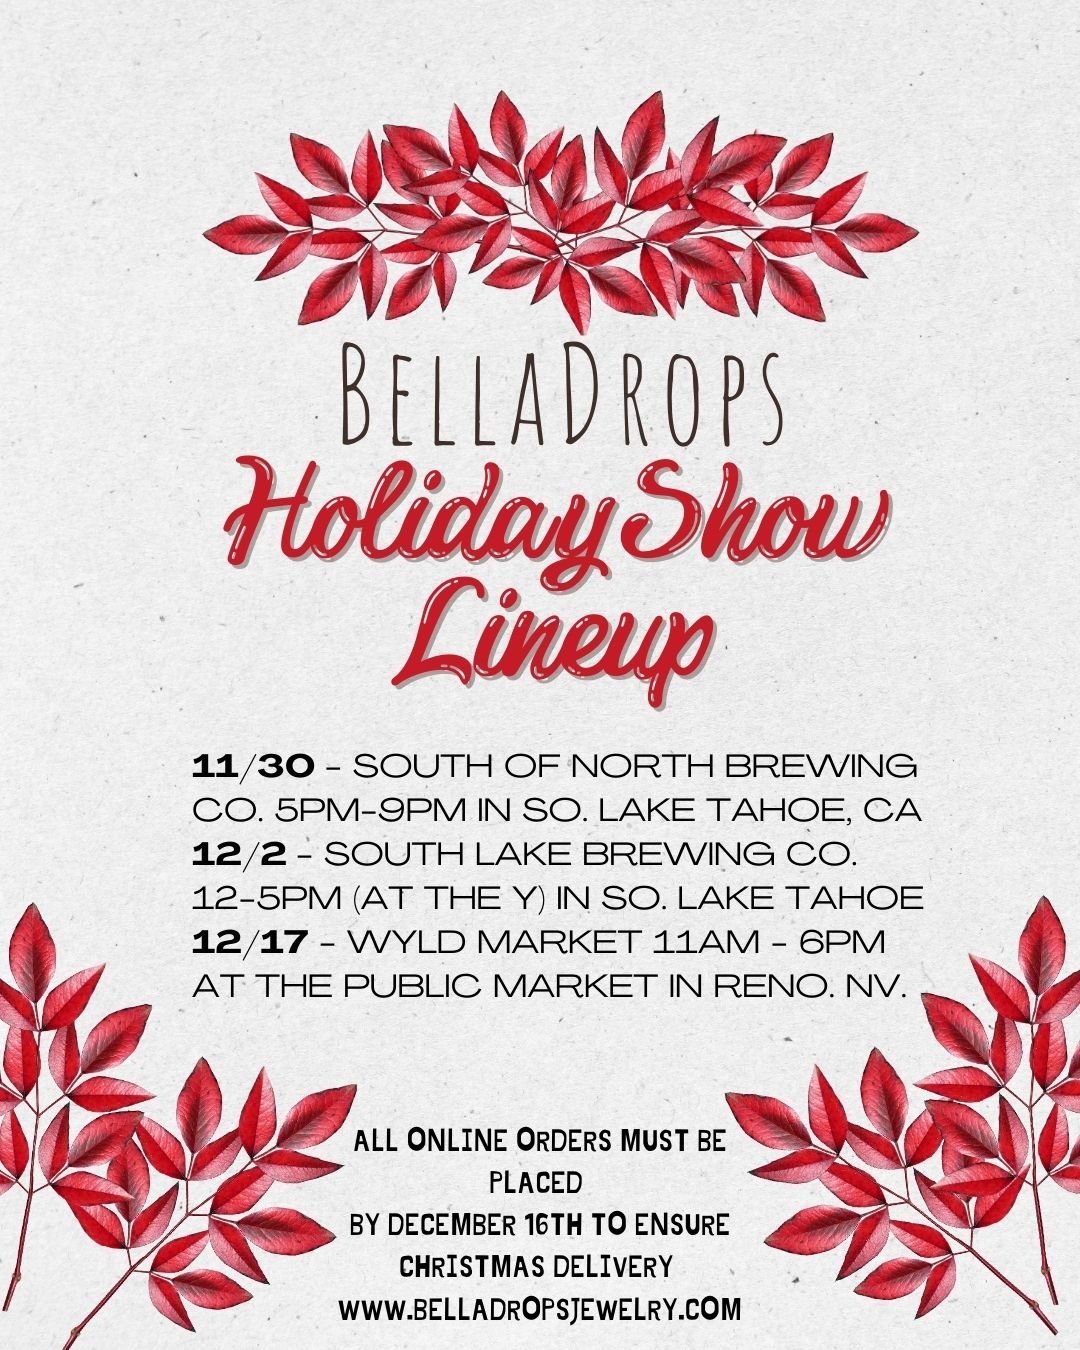 2023 Holiday Show lineup in So. Lake Tahoe, CA and Reno, NV